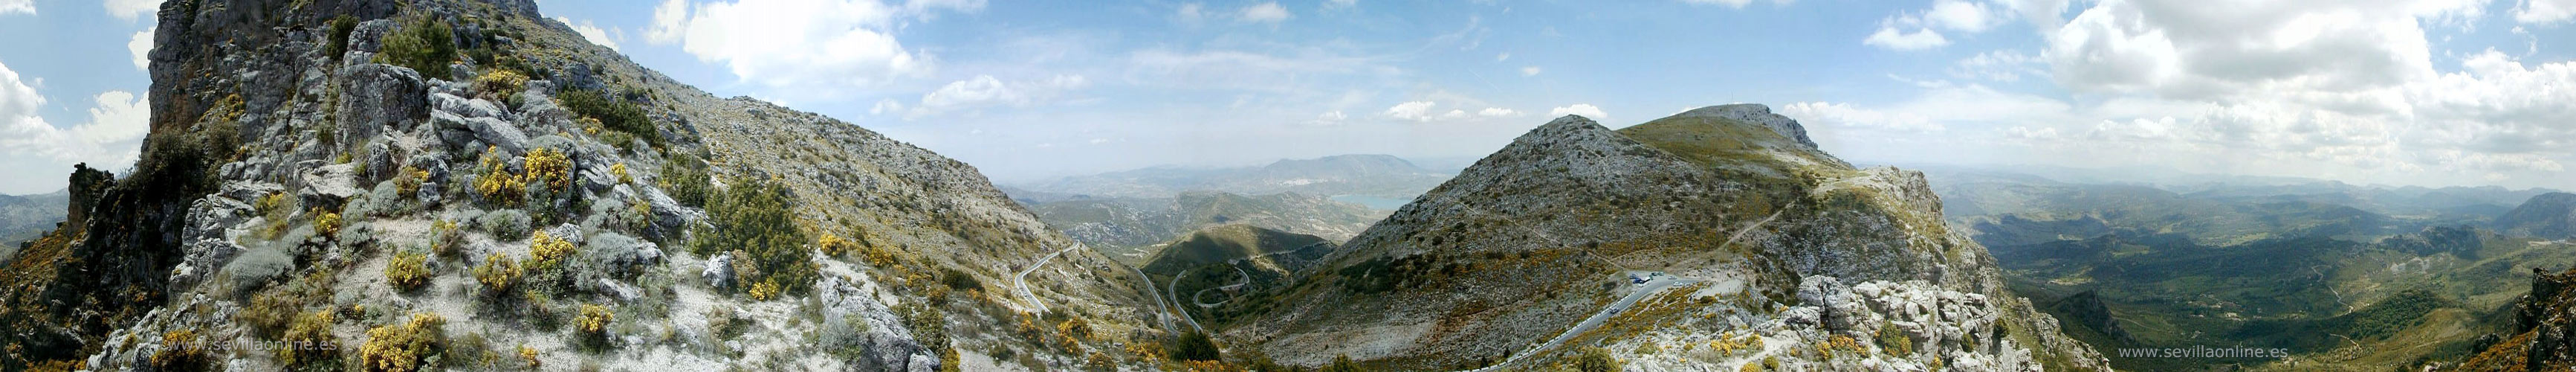 Panoramica nel Parco naturale Sierra de Grazalema, provincia di Cadice - Andalusia, Spagna